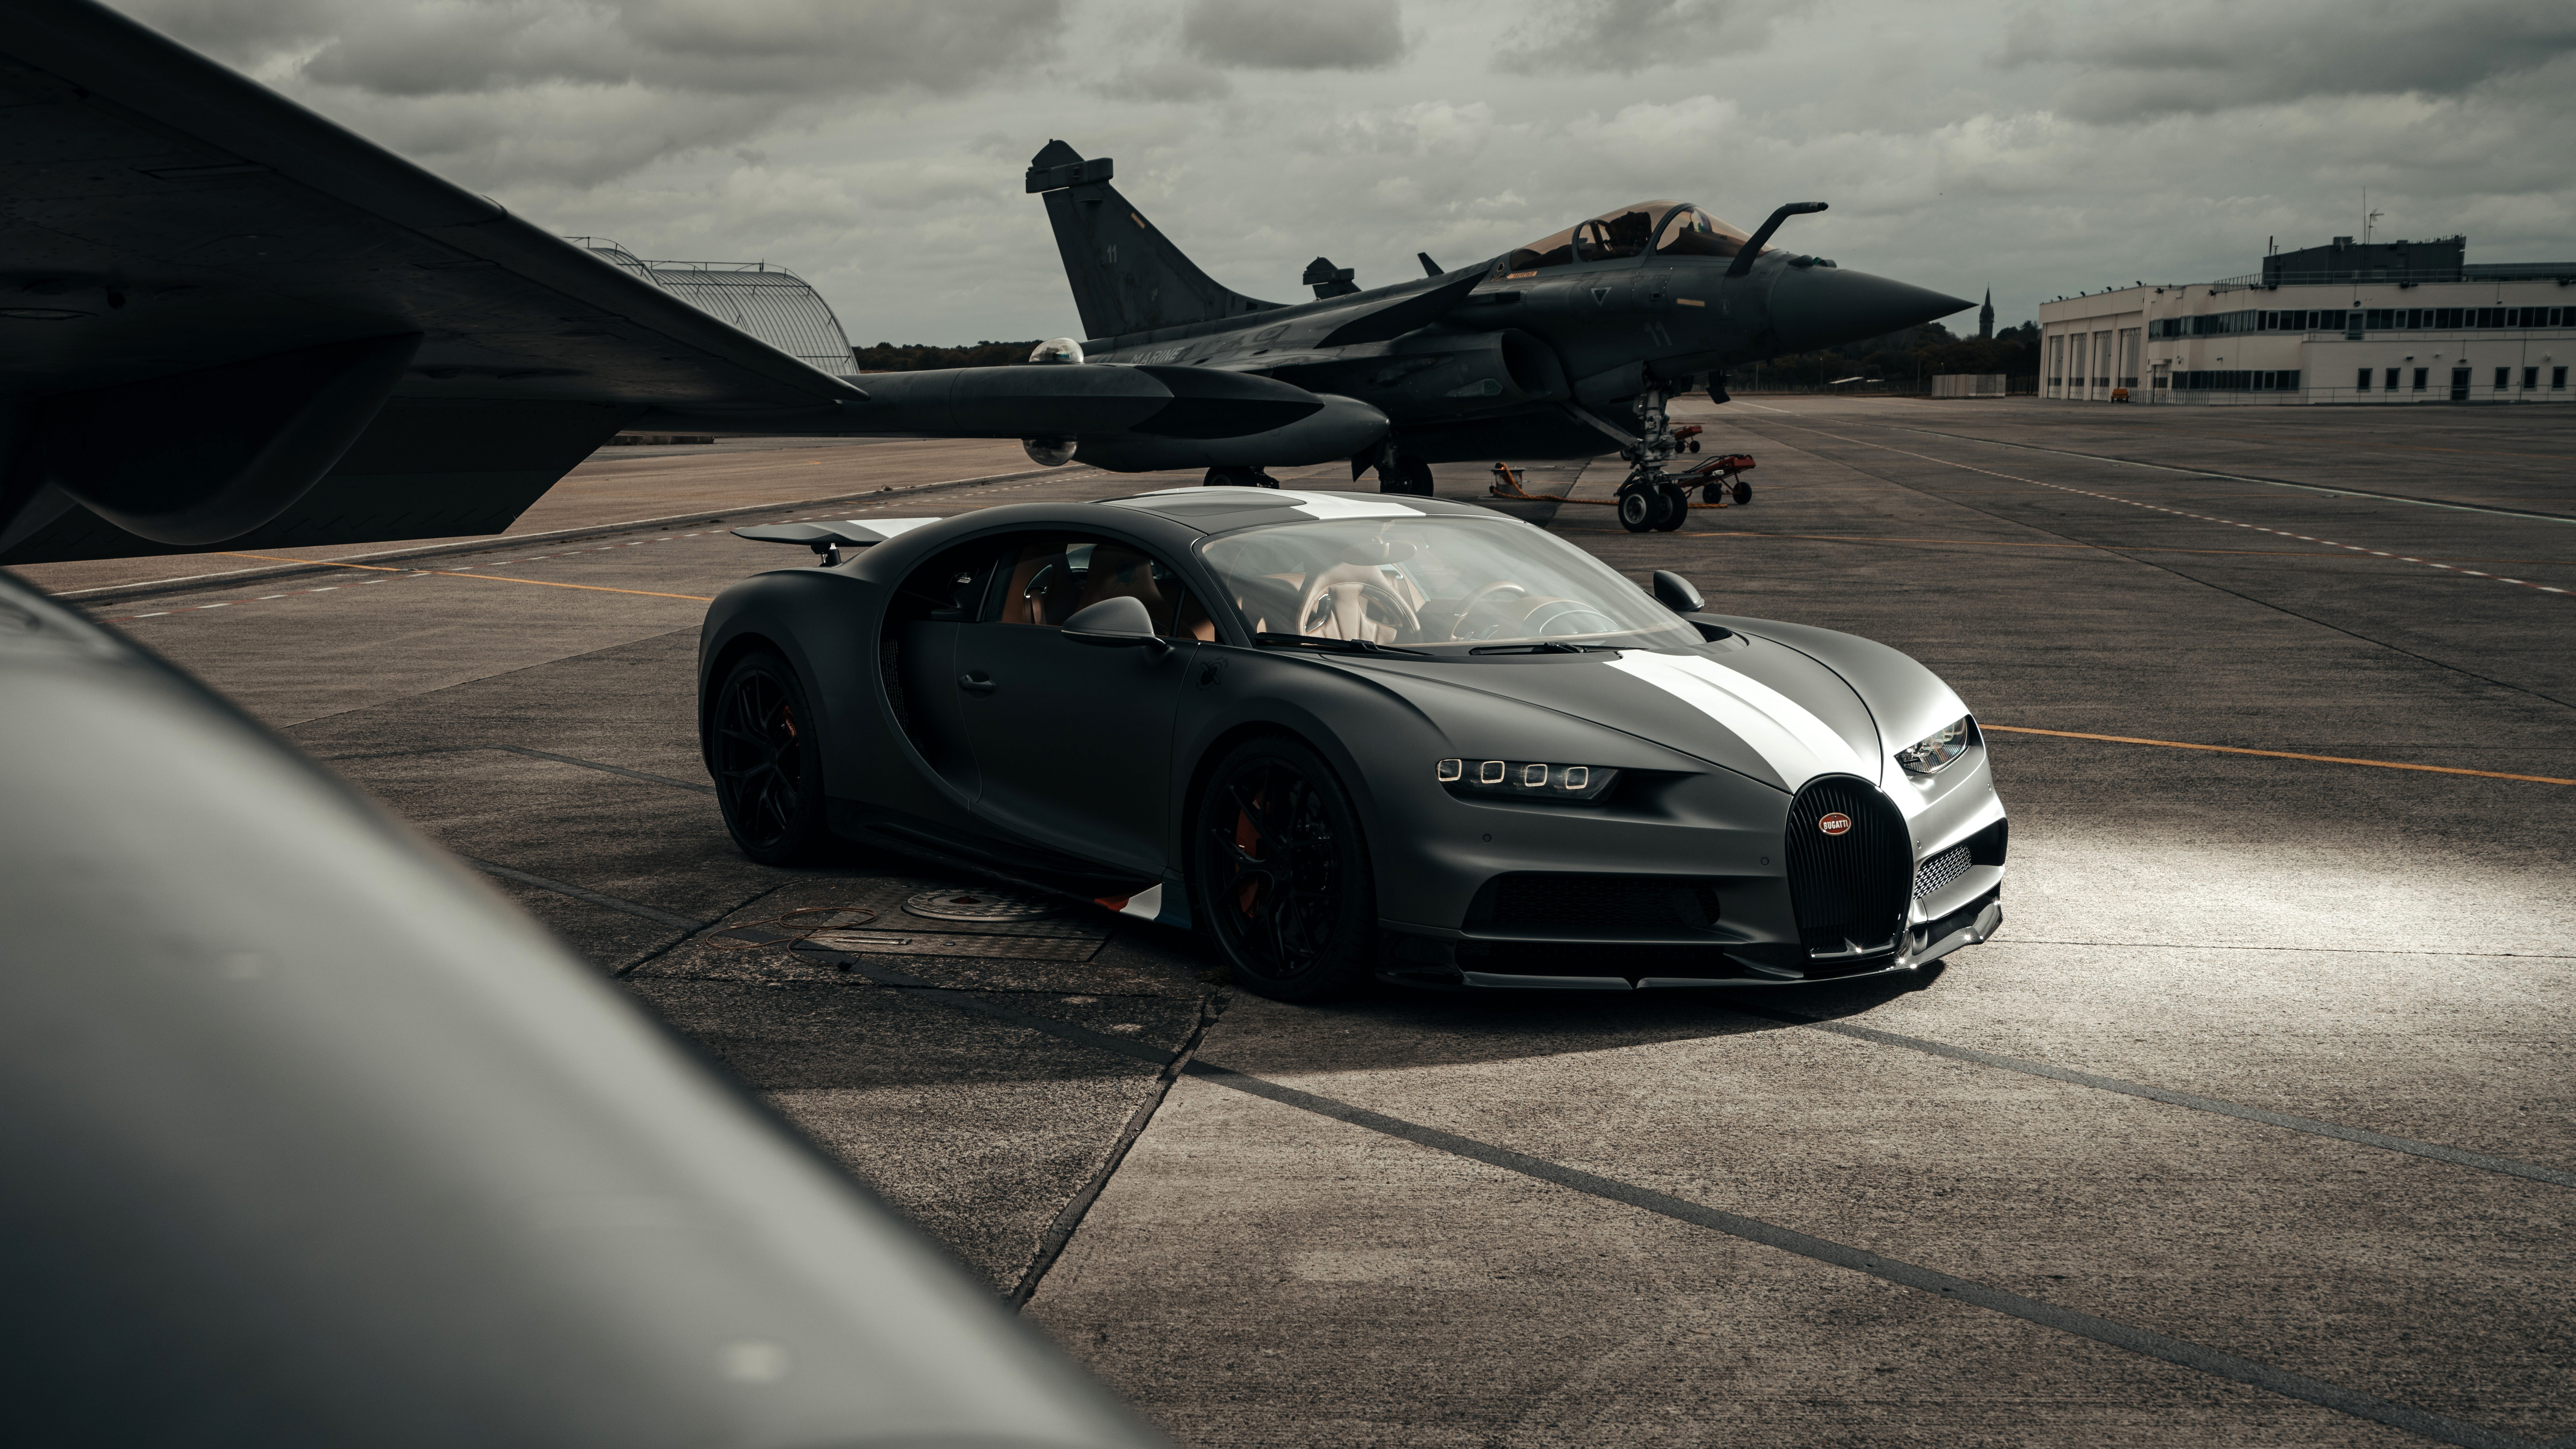 HD desktop wallpaper: Bugatti, Car, Supercar, Jet Fighter, Bugatti Chiron,  Vehicles, Black Car download free picture #500943